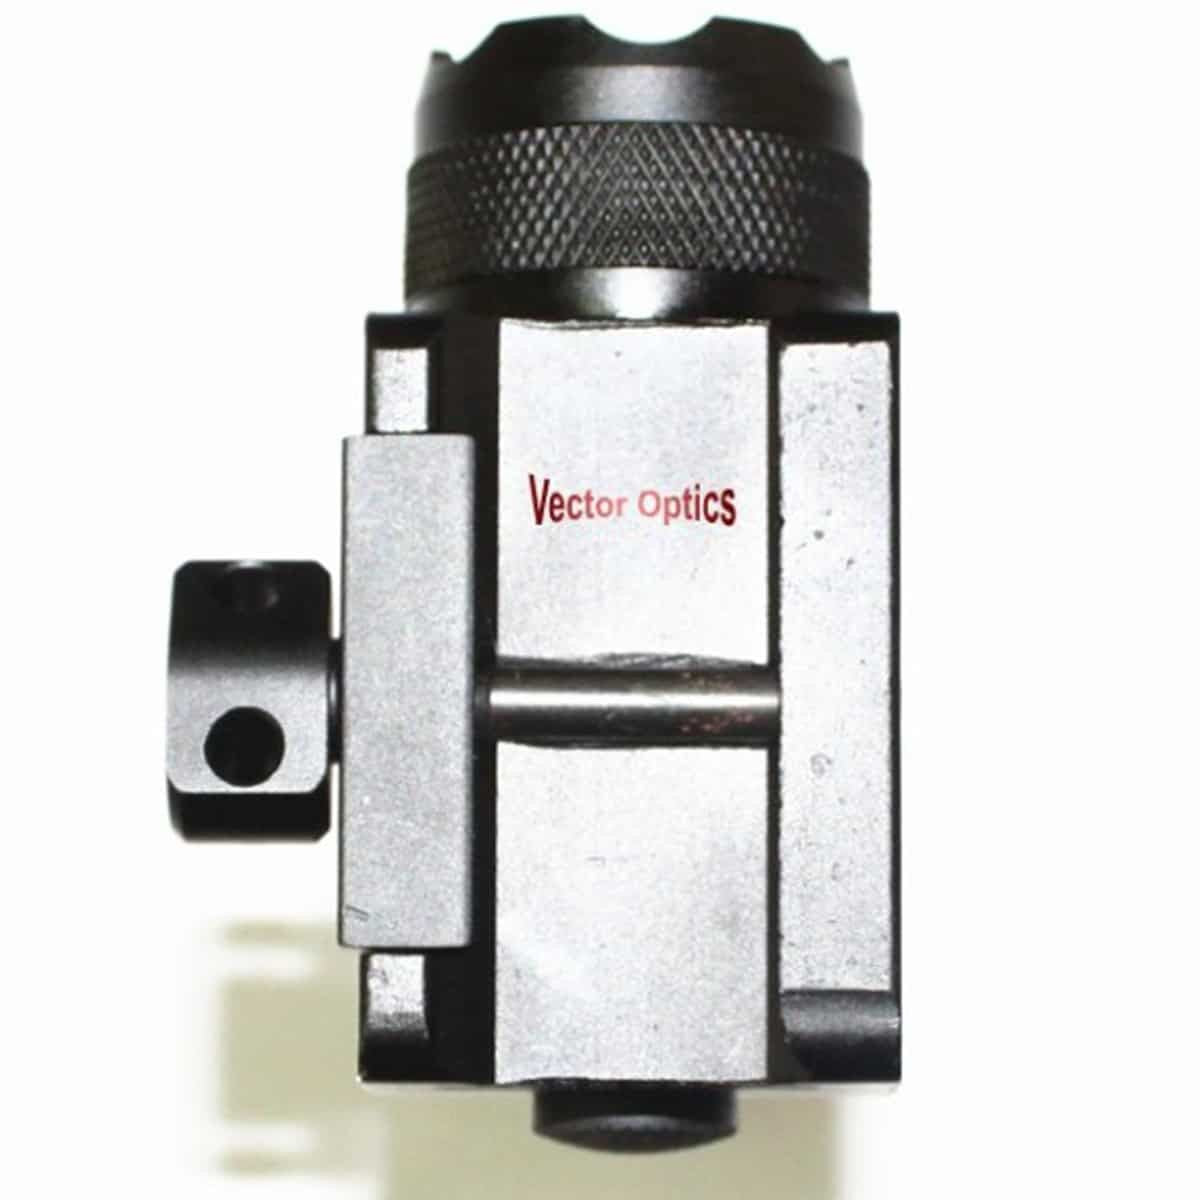 Vector Optics Cyclops Vertical Foregrip Flashlight